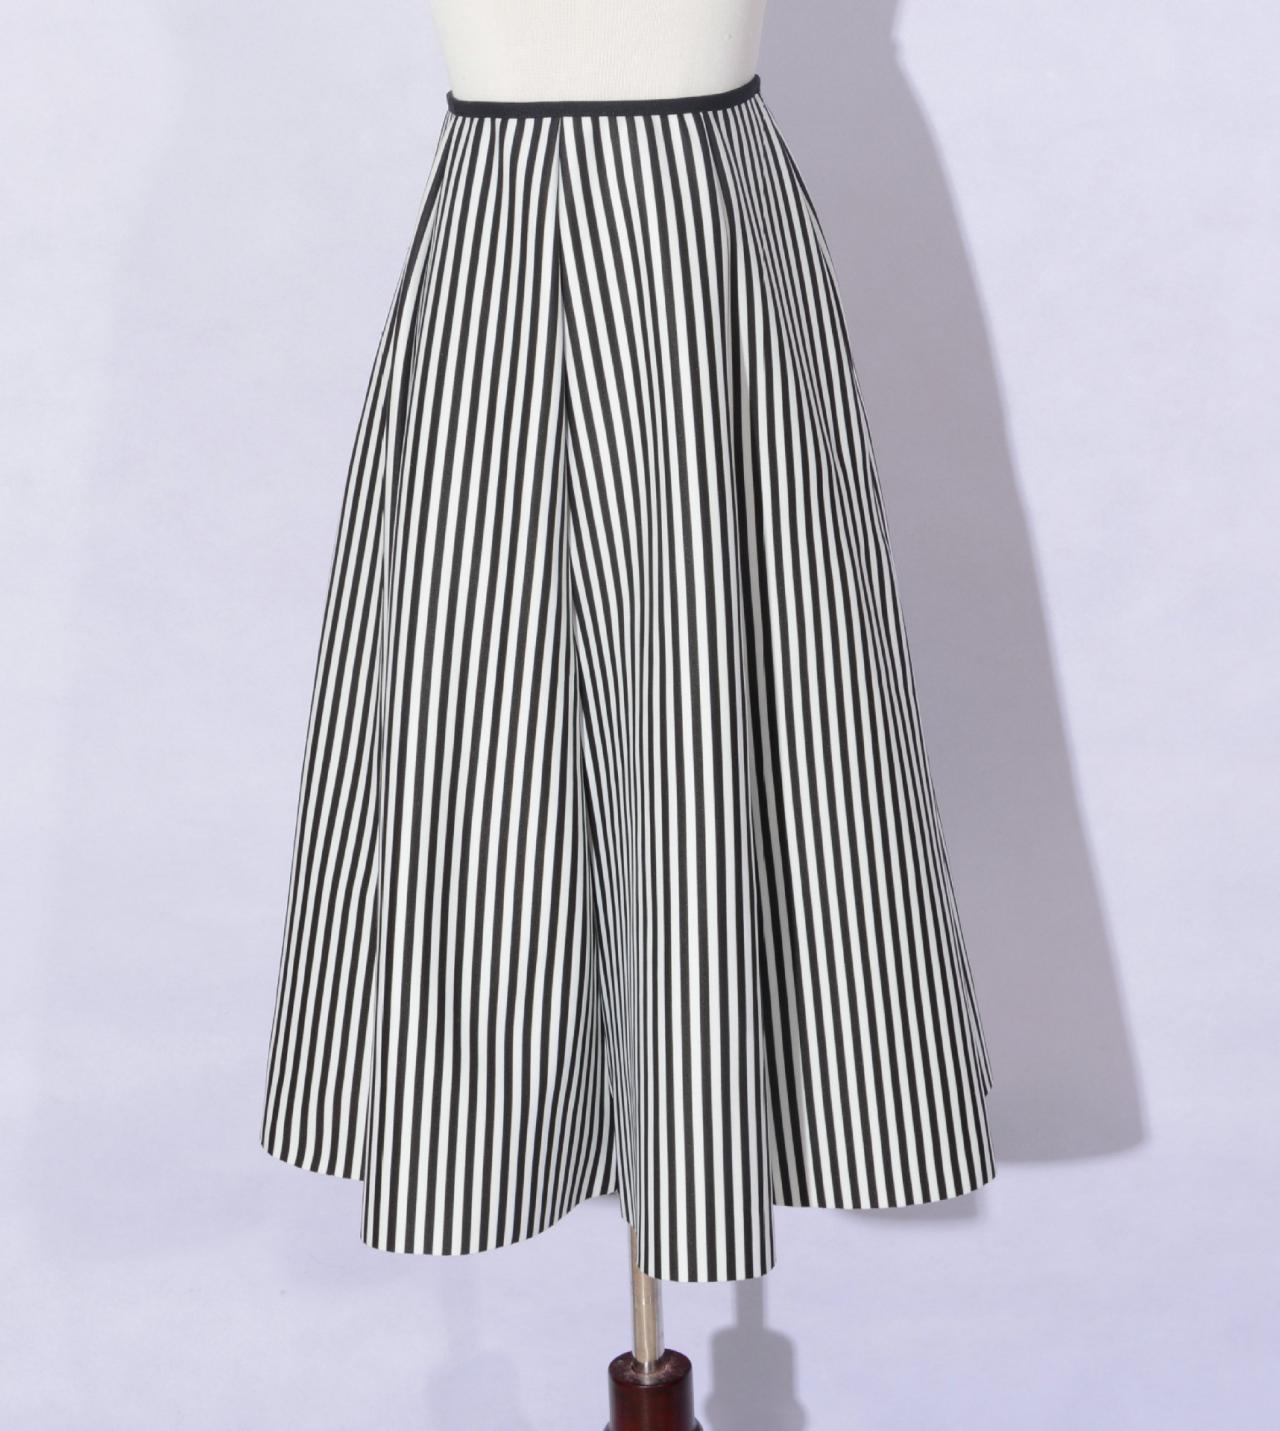 Retro Striped Cotton High Waisted Skirt